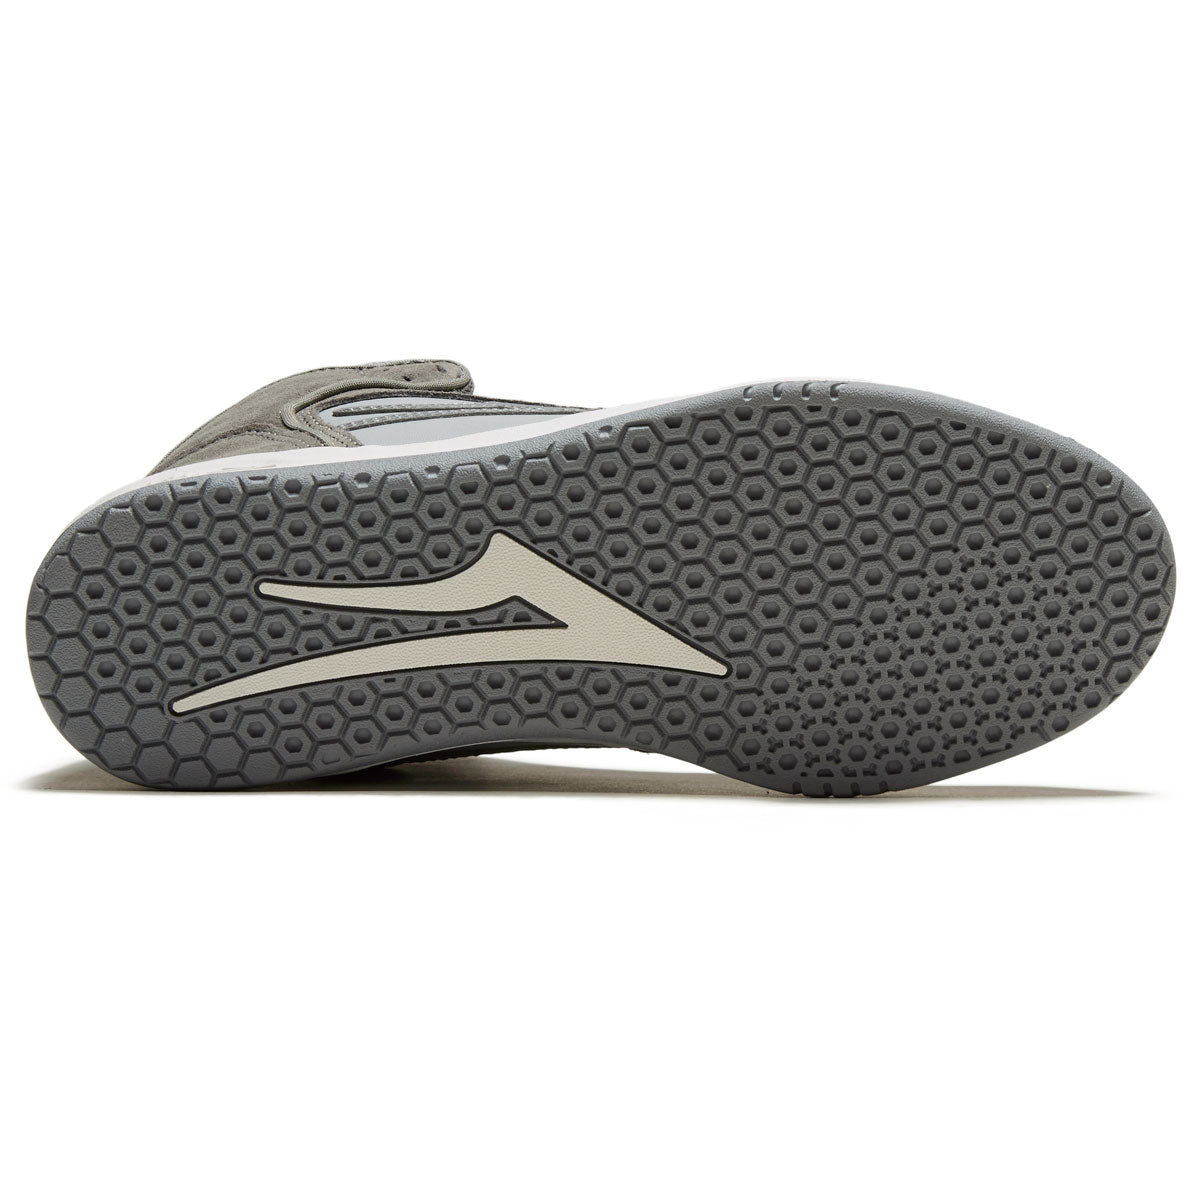 Lakai Telford Shoes - Grey/Light Grey Suede image 4